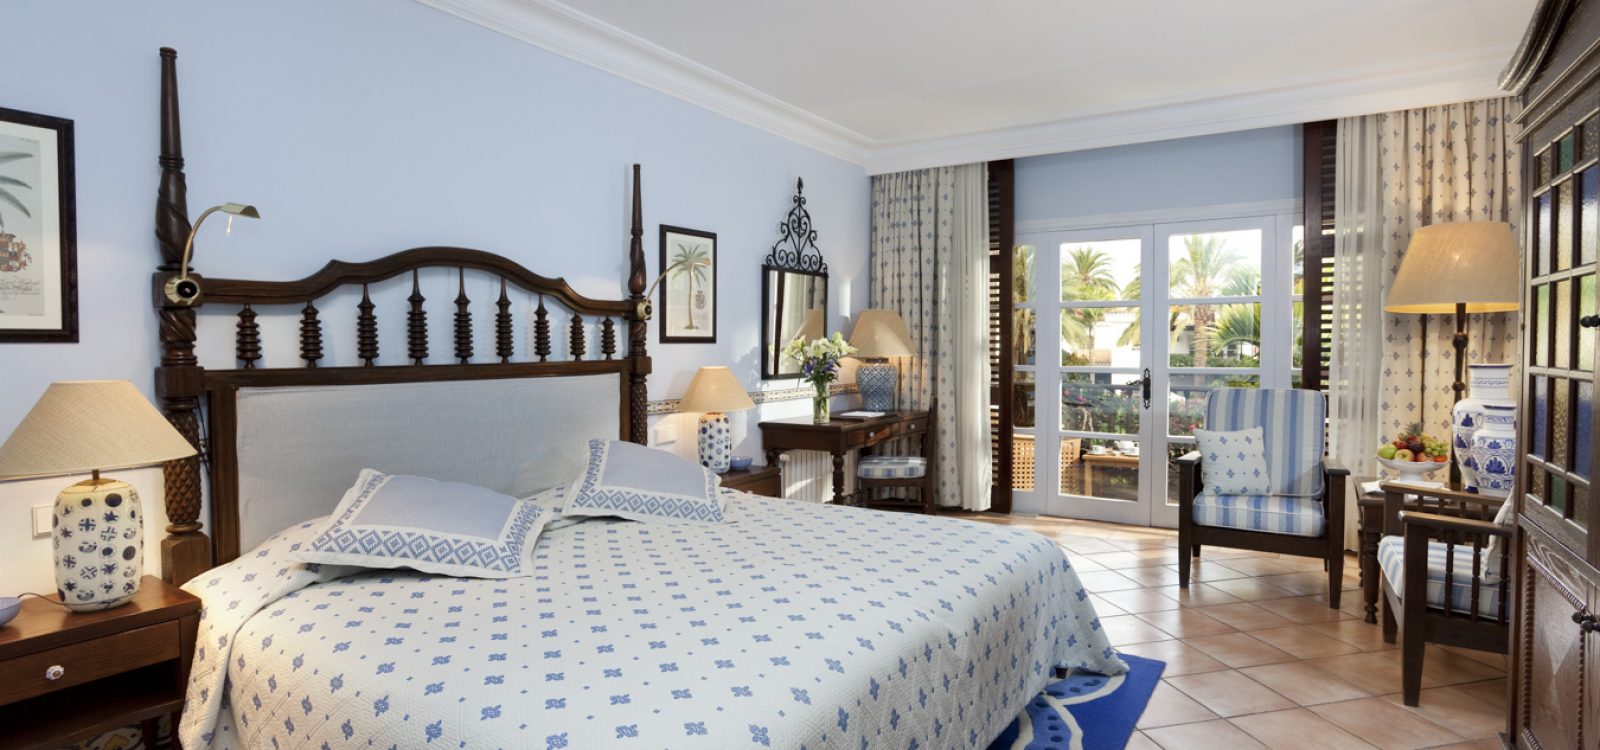 Seaside Grand Hotel Residencia-HR 32 double room-WEB